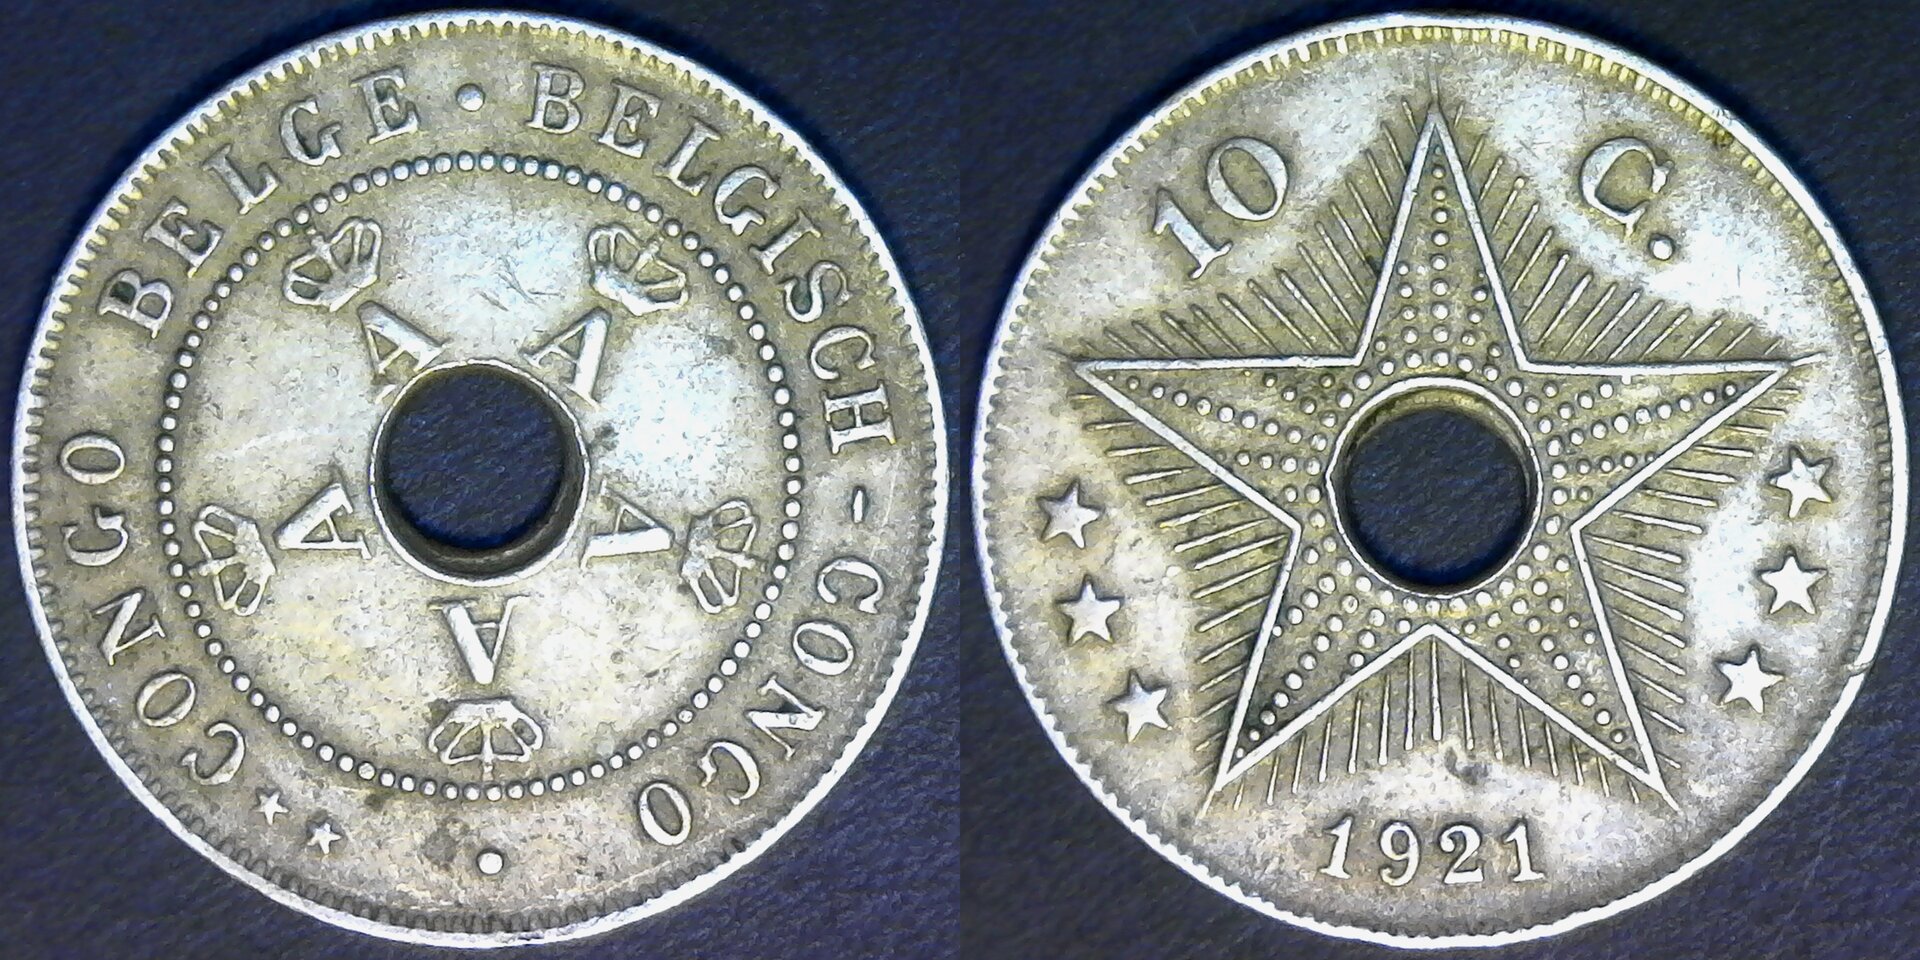 Belgian Congo 10 centimes 1921 obv-side.jpg